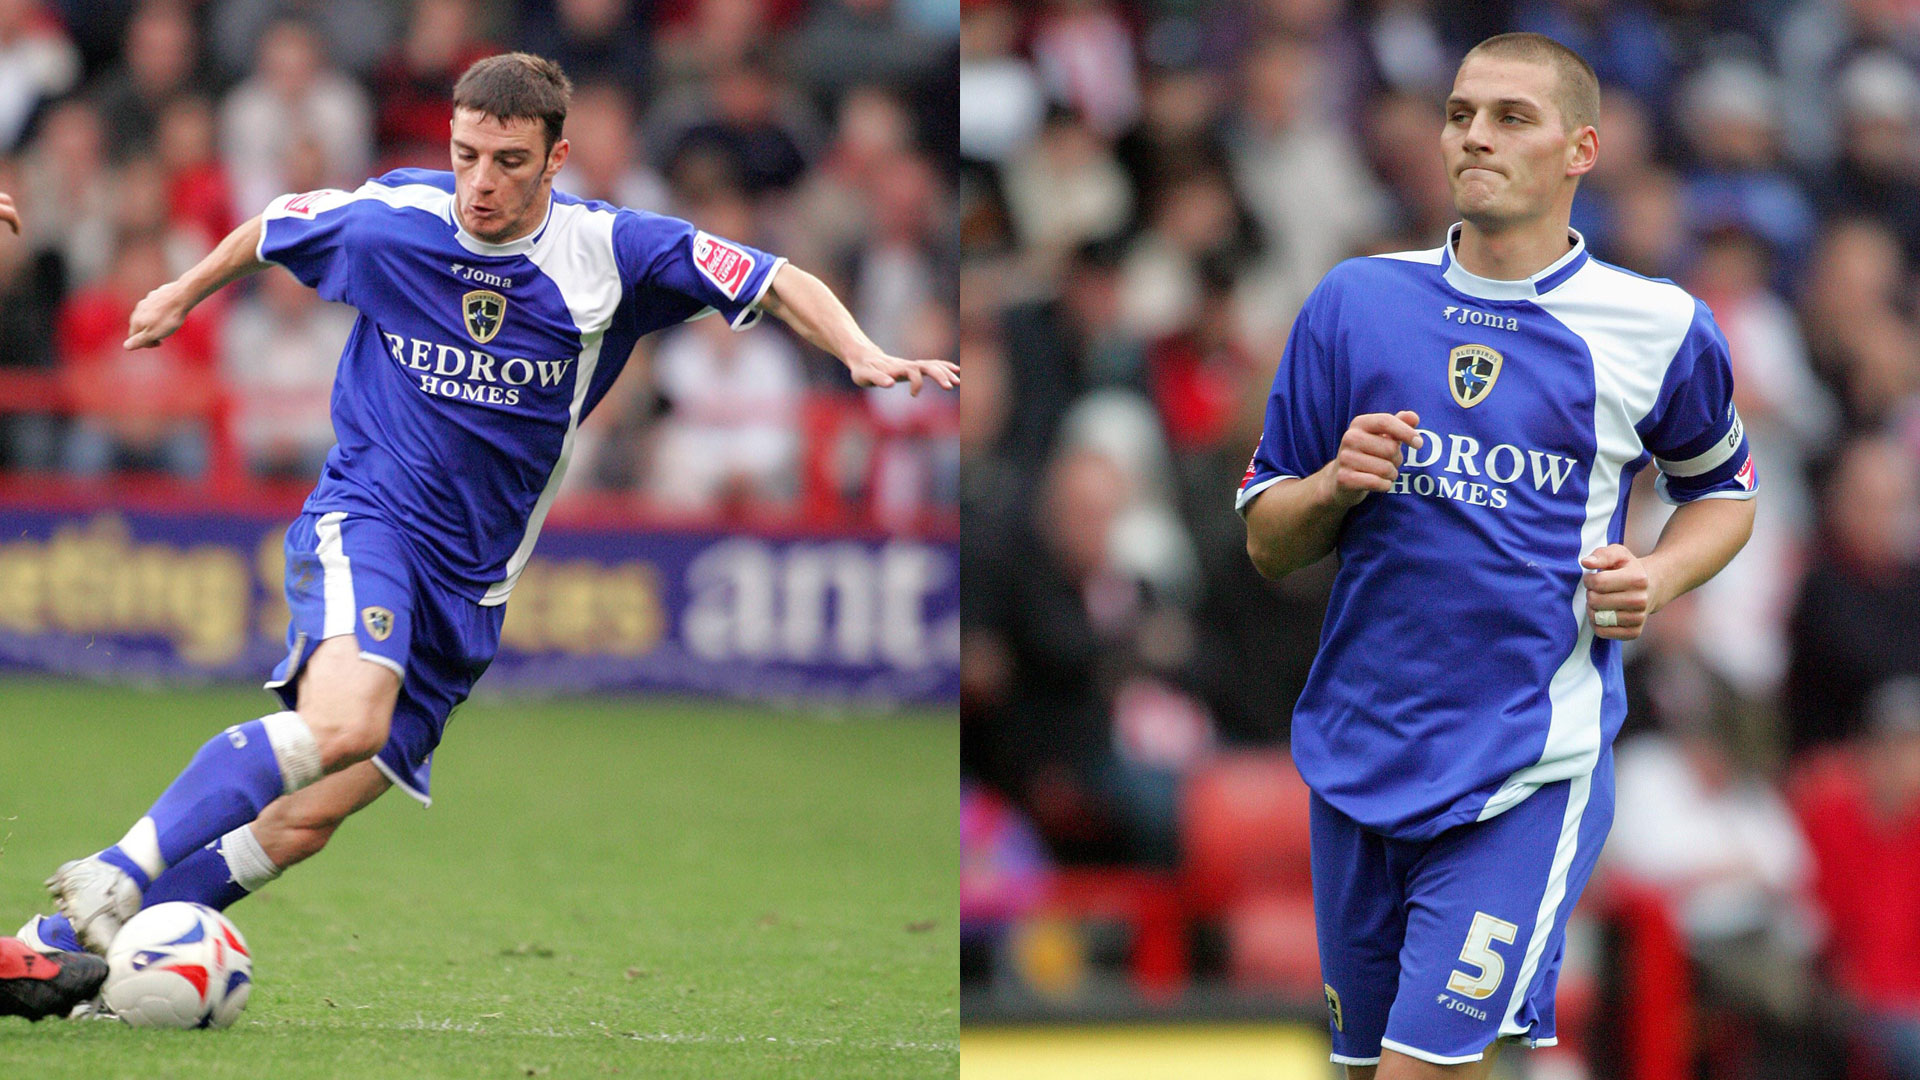 Jason Koumas and Darren Purse pictured, scorers when City beat Leeds in 2005...